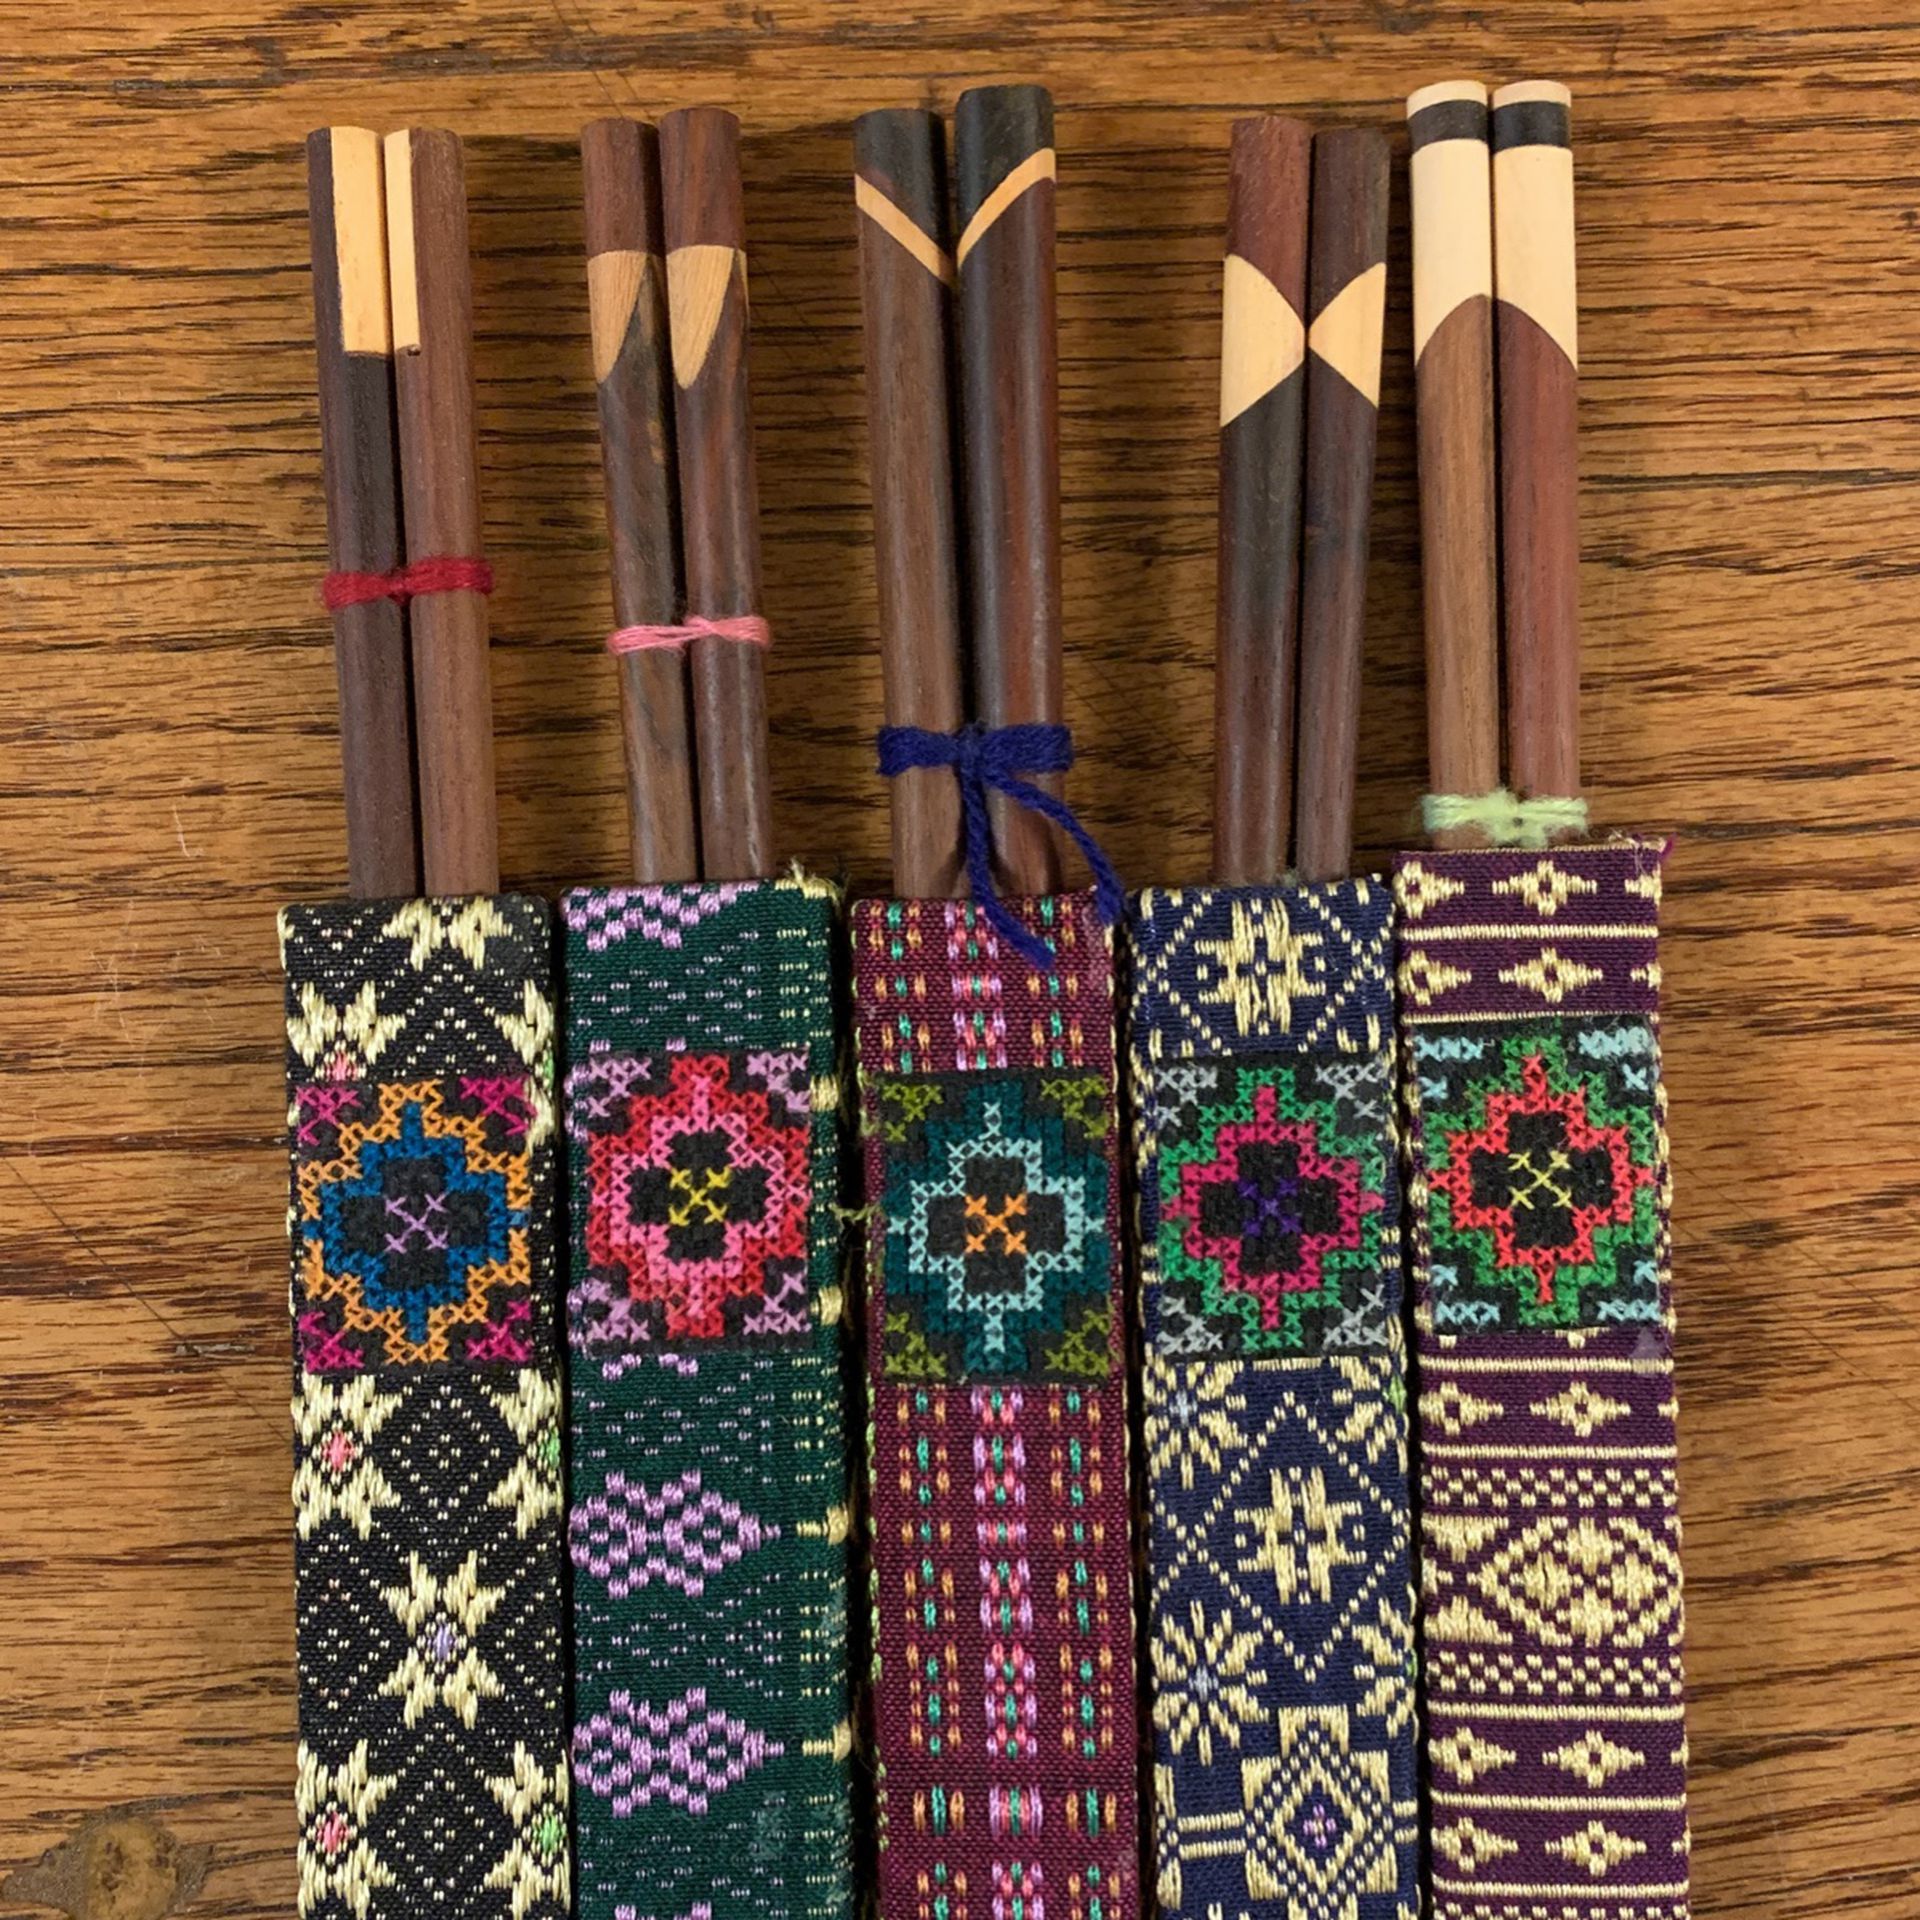 Chopsticks From Thailand 